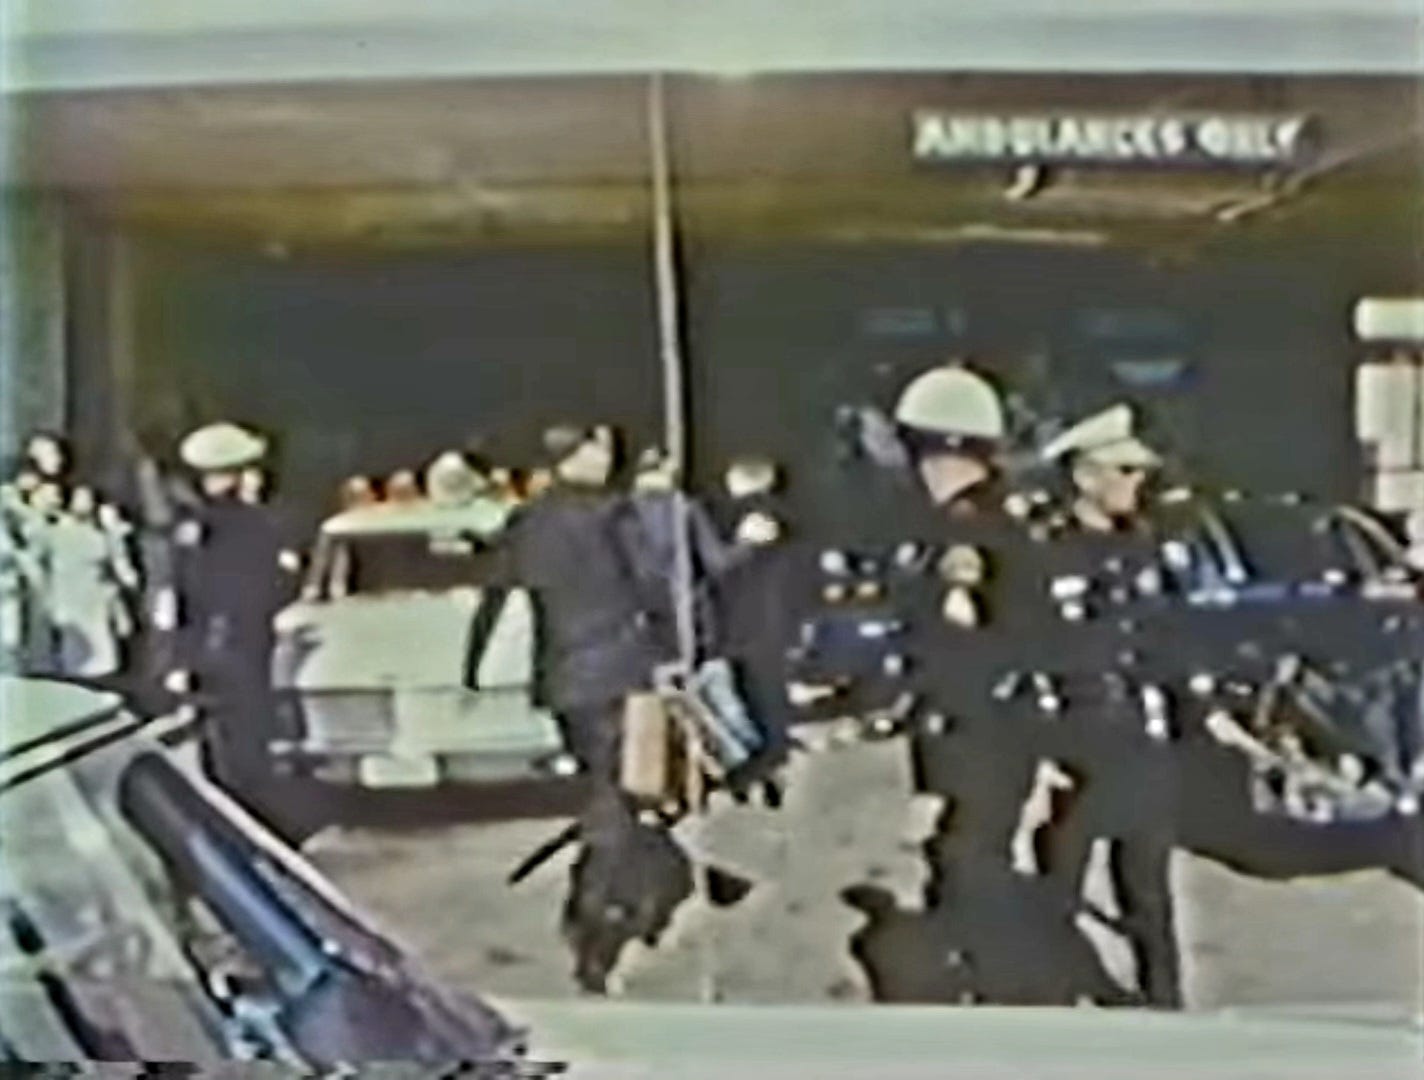 Atkins film frame showing Dr. Burkley (center, black suit) entering Parkland past the limousine (right) with rear top on the car.